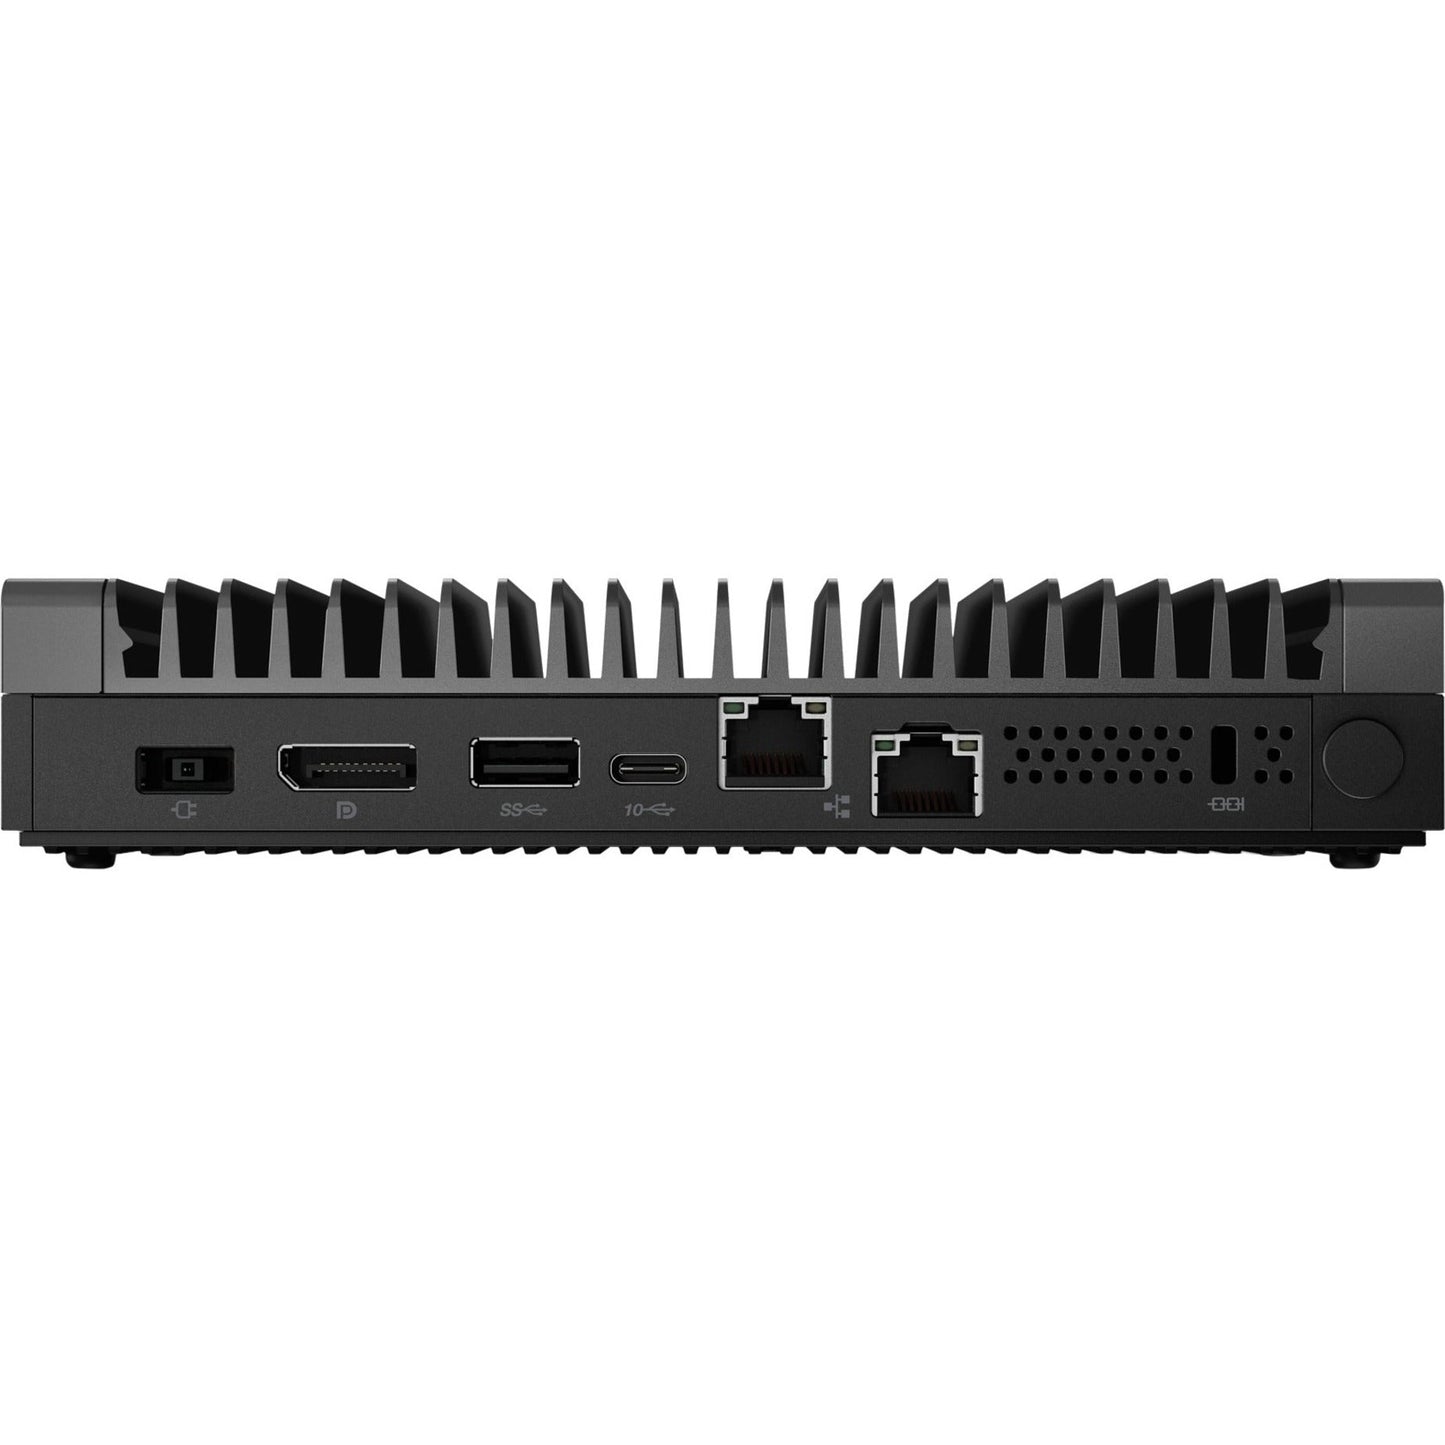 Lenovo ThinkCentre M90n-1 11AH000YUS Desktop Computer - Intel Celeron 4205U 1.80 GHz - 4 GB RAM DDR4 SDRAM - 256 GB SSD - Ultra Small - Black